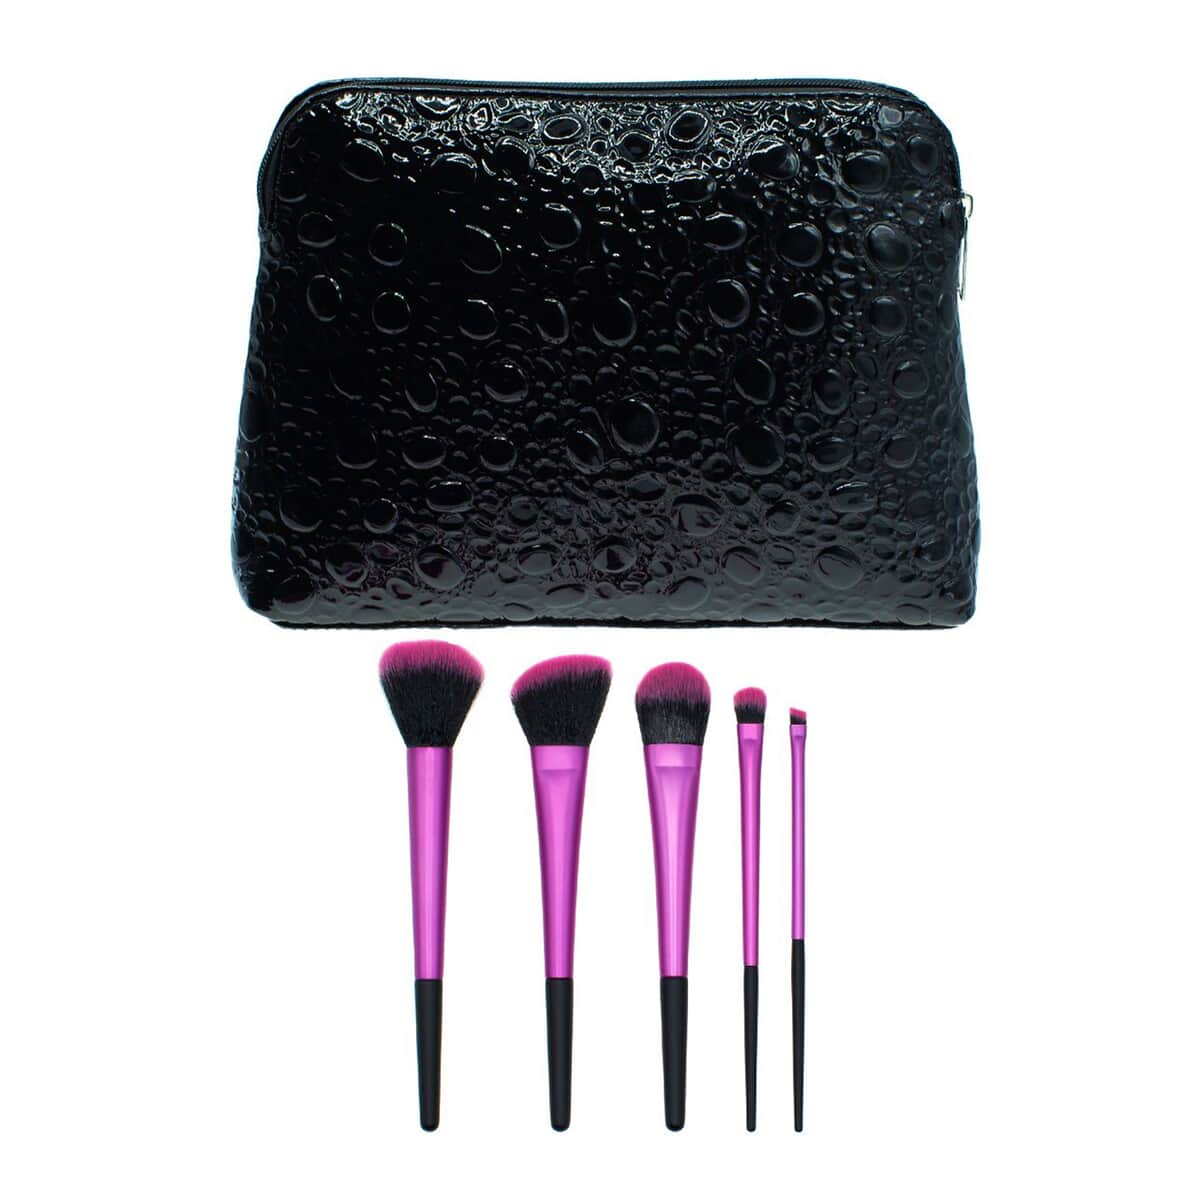 Bubble Textured Black Vegan Leather Bag with Pink Brushes | Cosmetic Bag | Makeup Bag | Makeup Pouch | Travel Makeup Bag image number 0